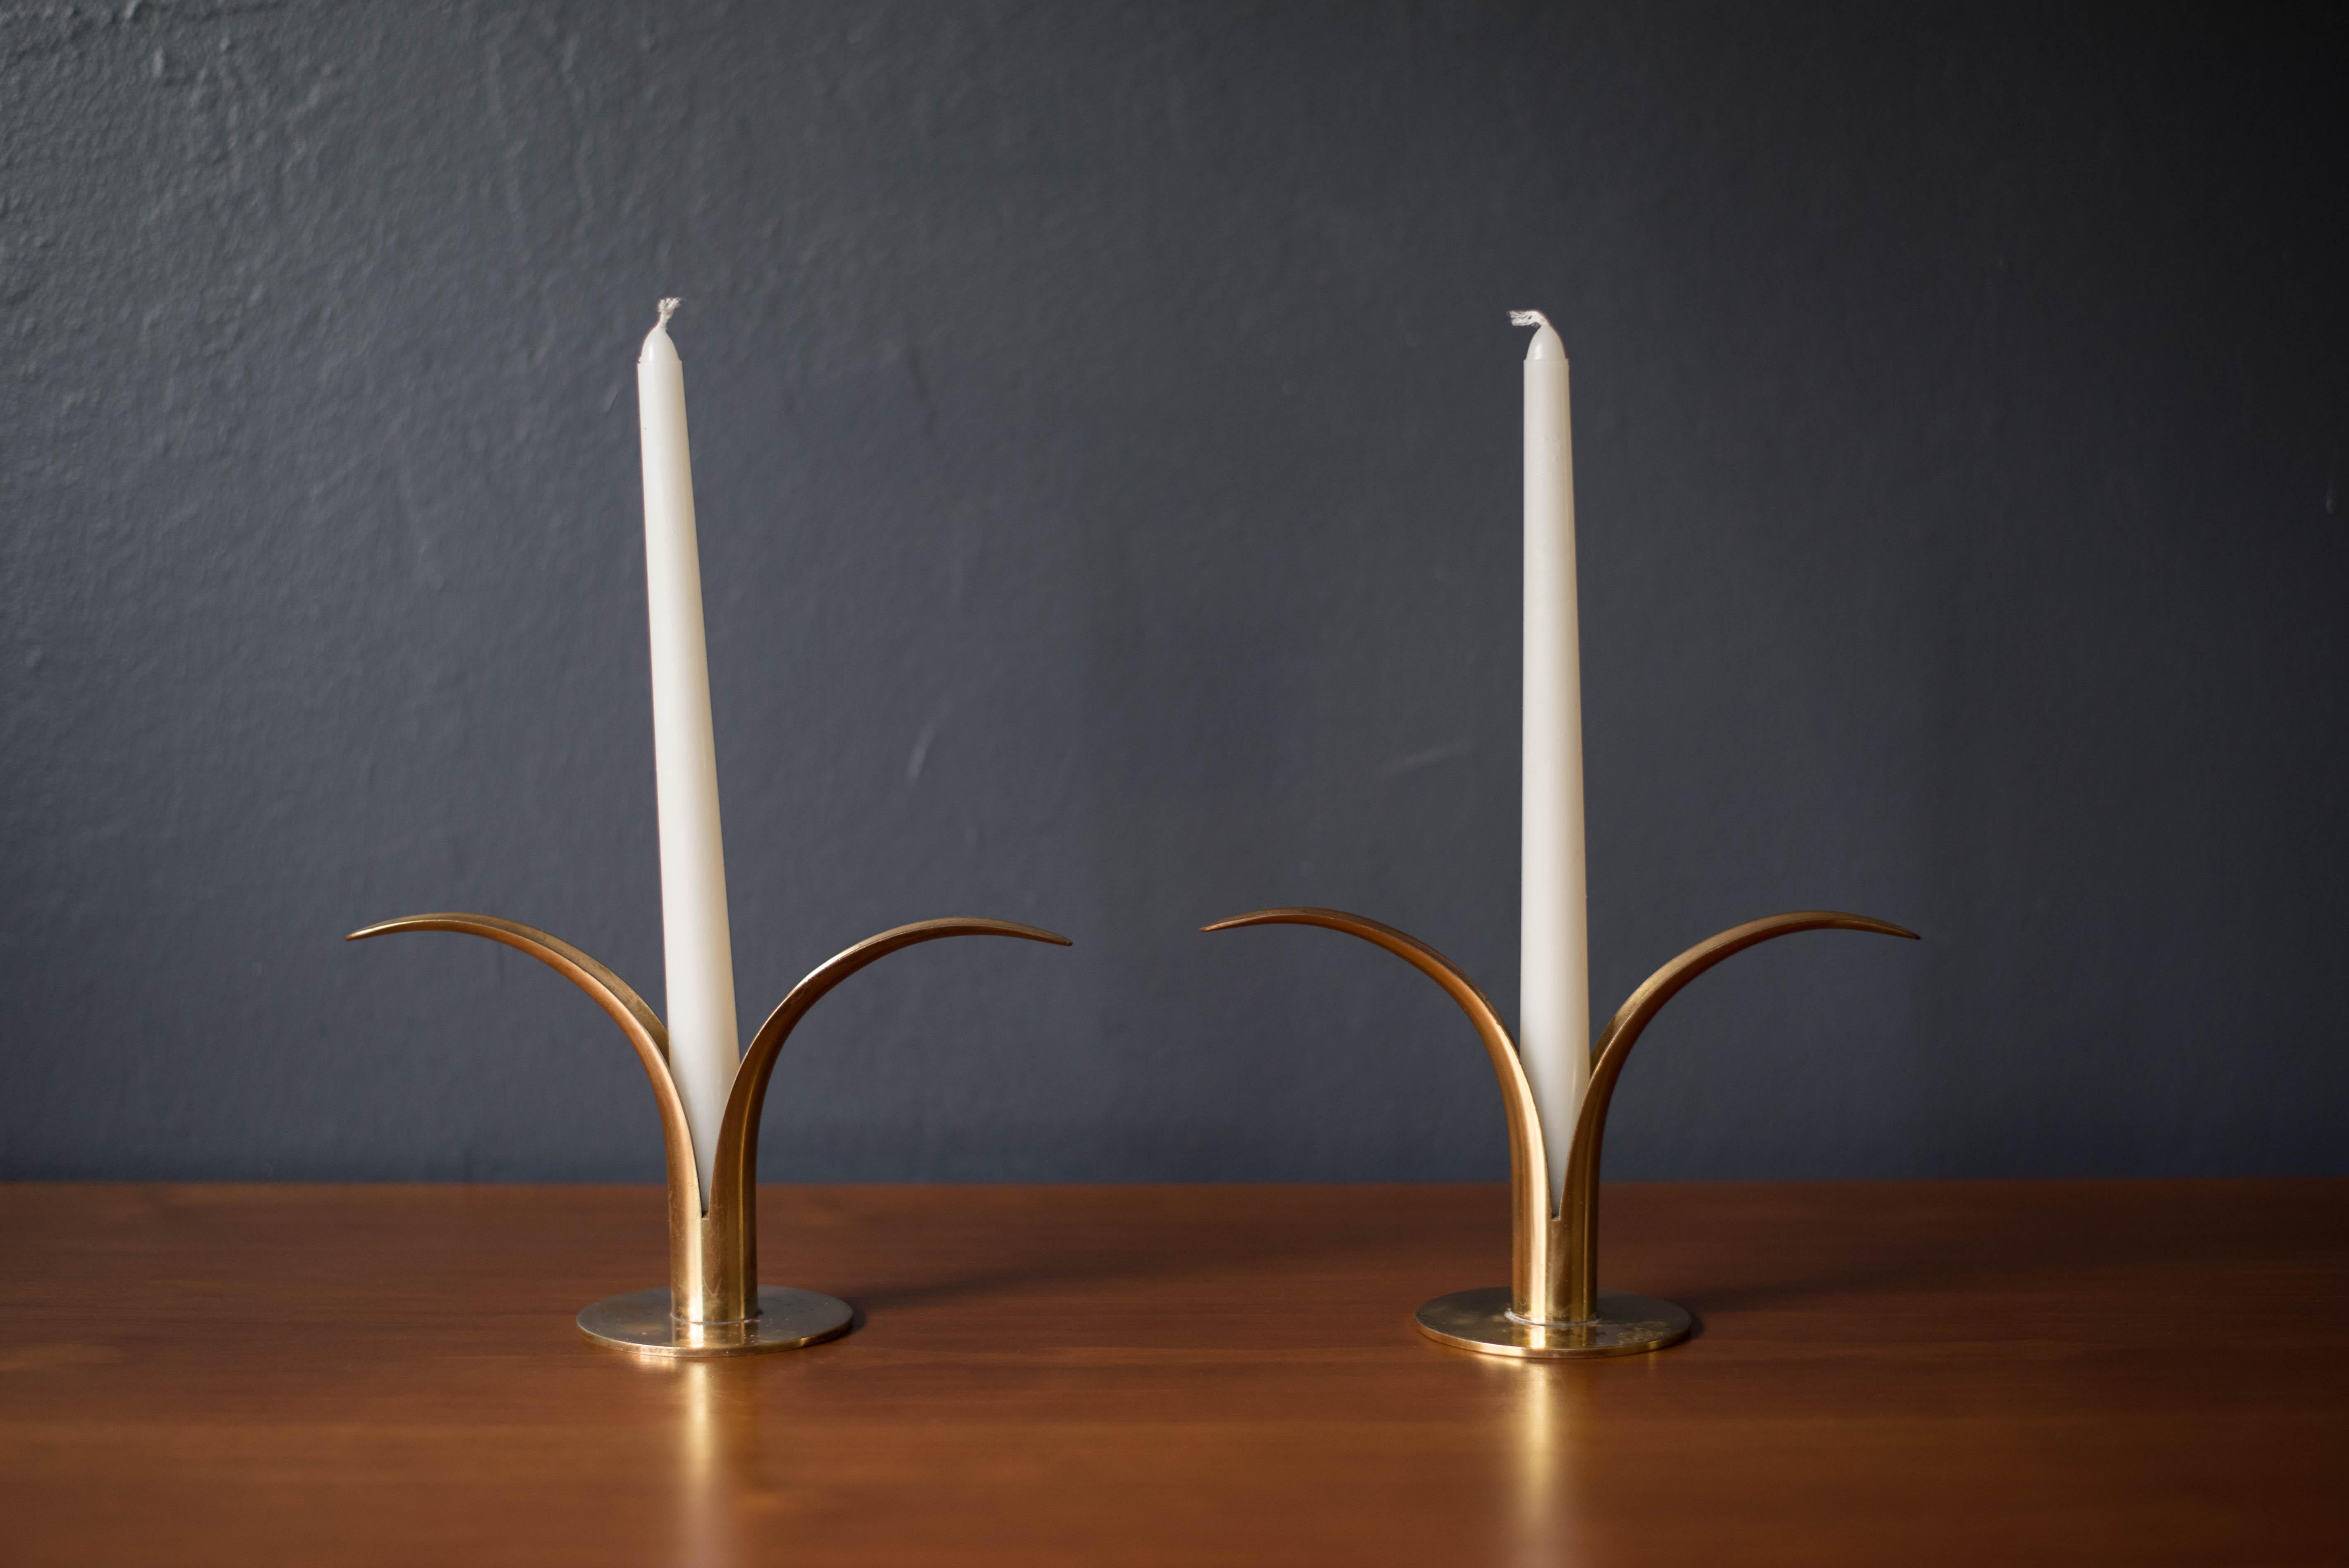 Mid-Century Modern pair of Liljan candleholders by sculptor Ivar Ålenius Björk for Ystad Metall of Sweden. Designed to fit taper candlesticks, this set features a sculptural 